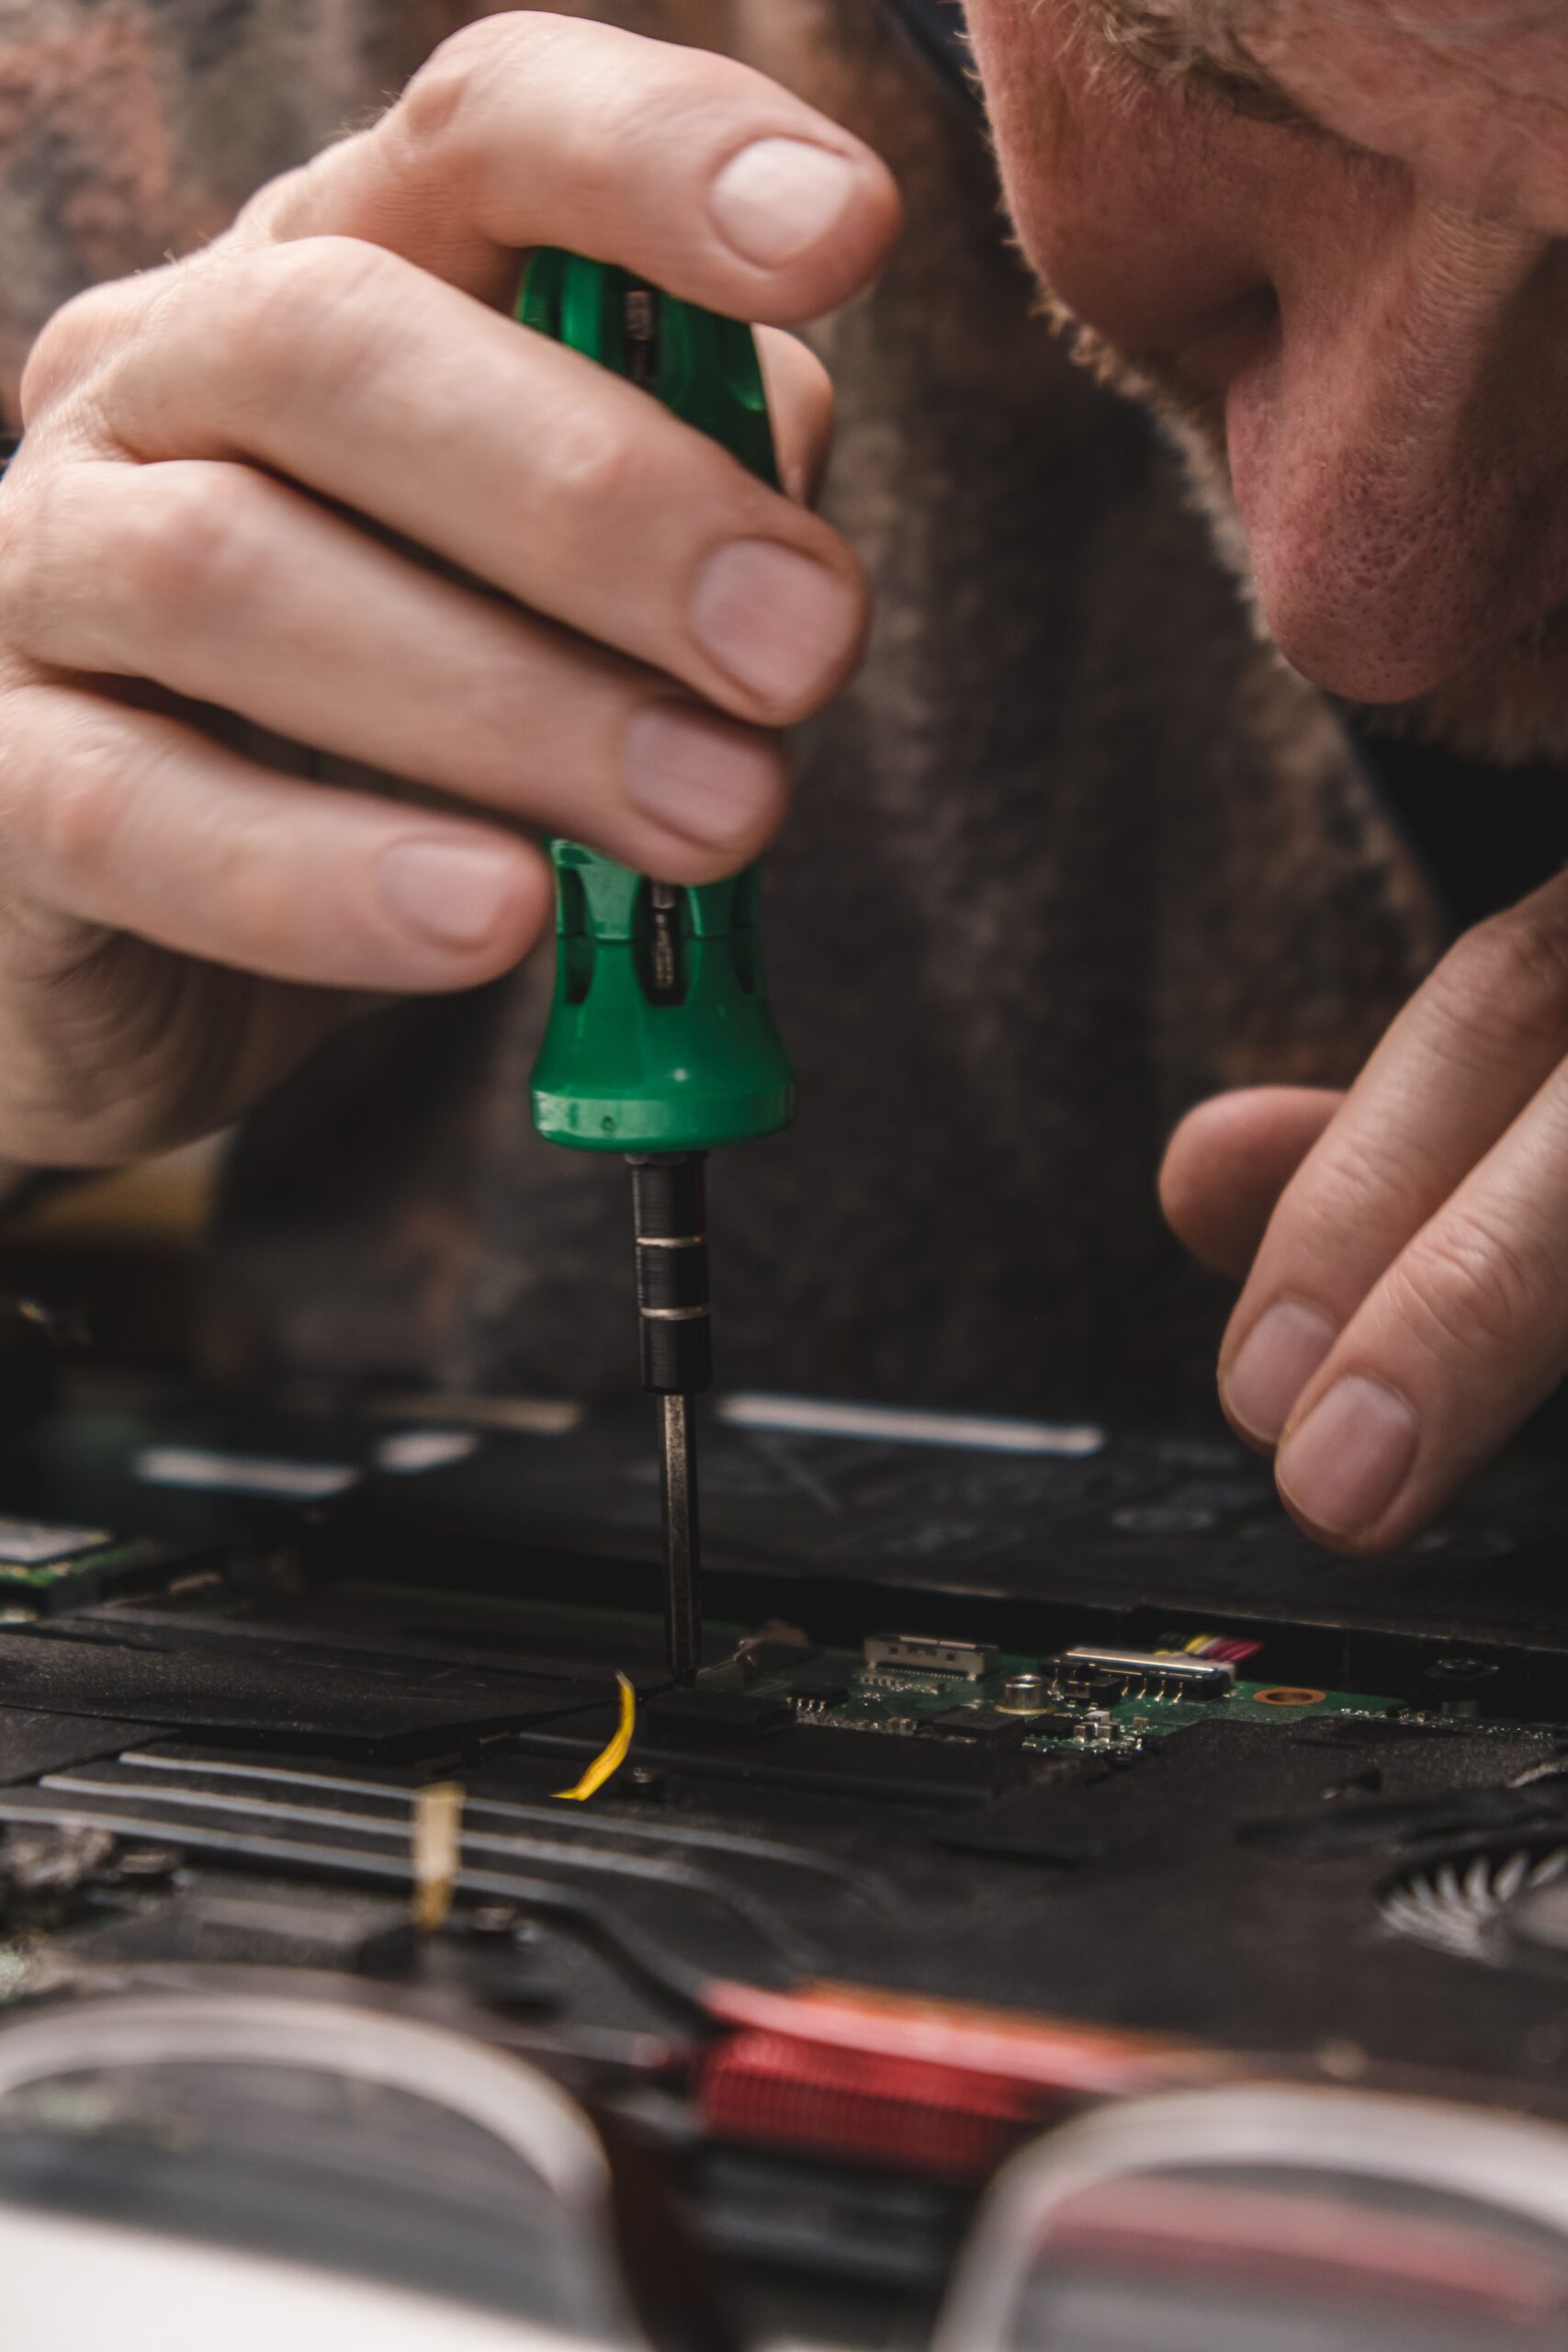 Computer repair specialist installing laptop components